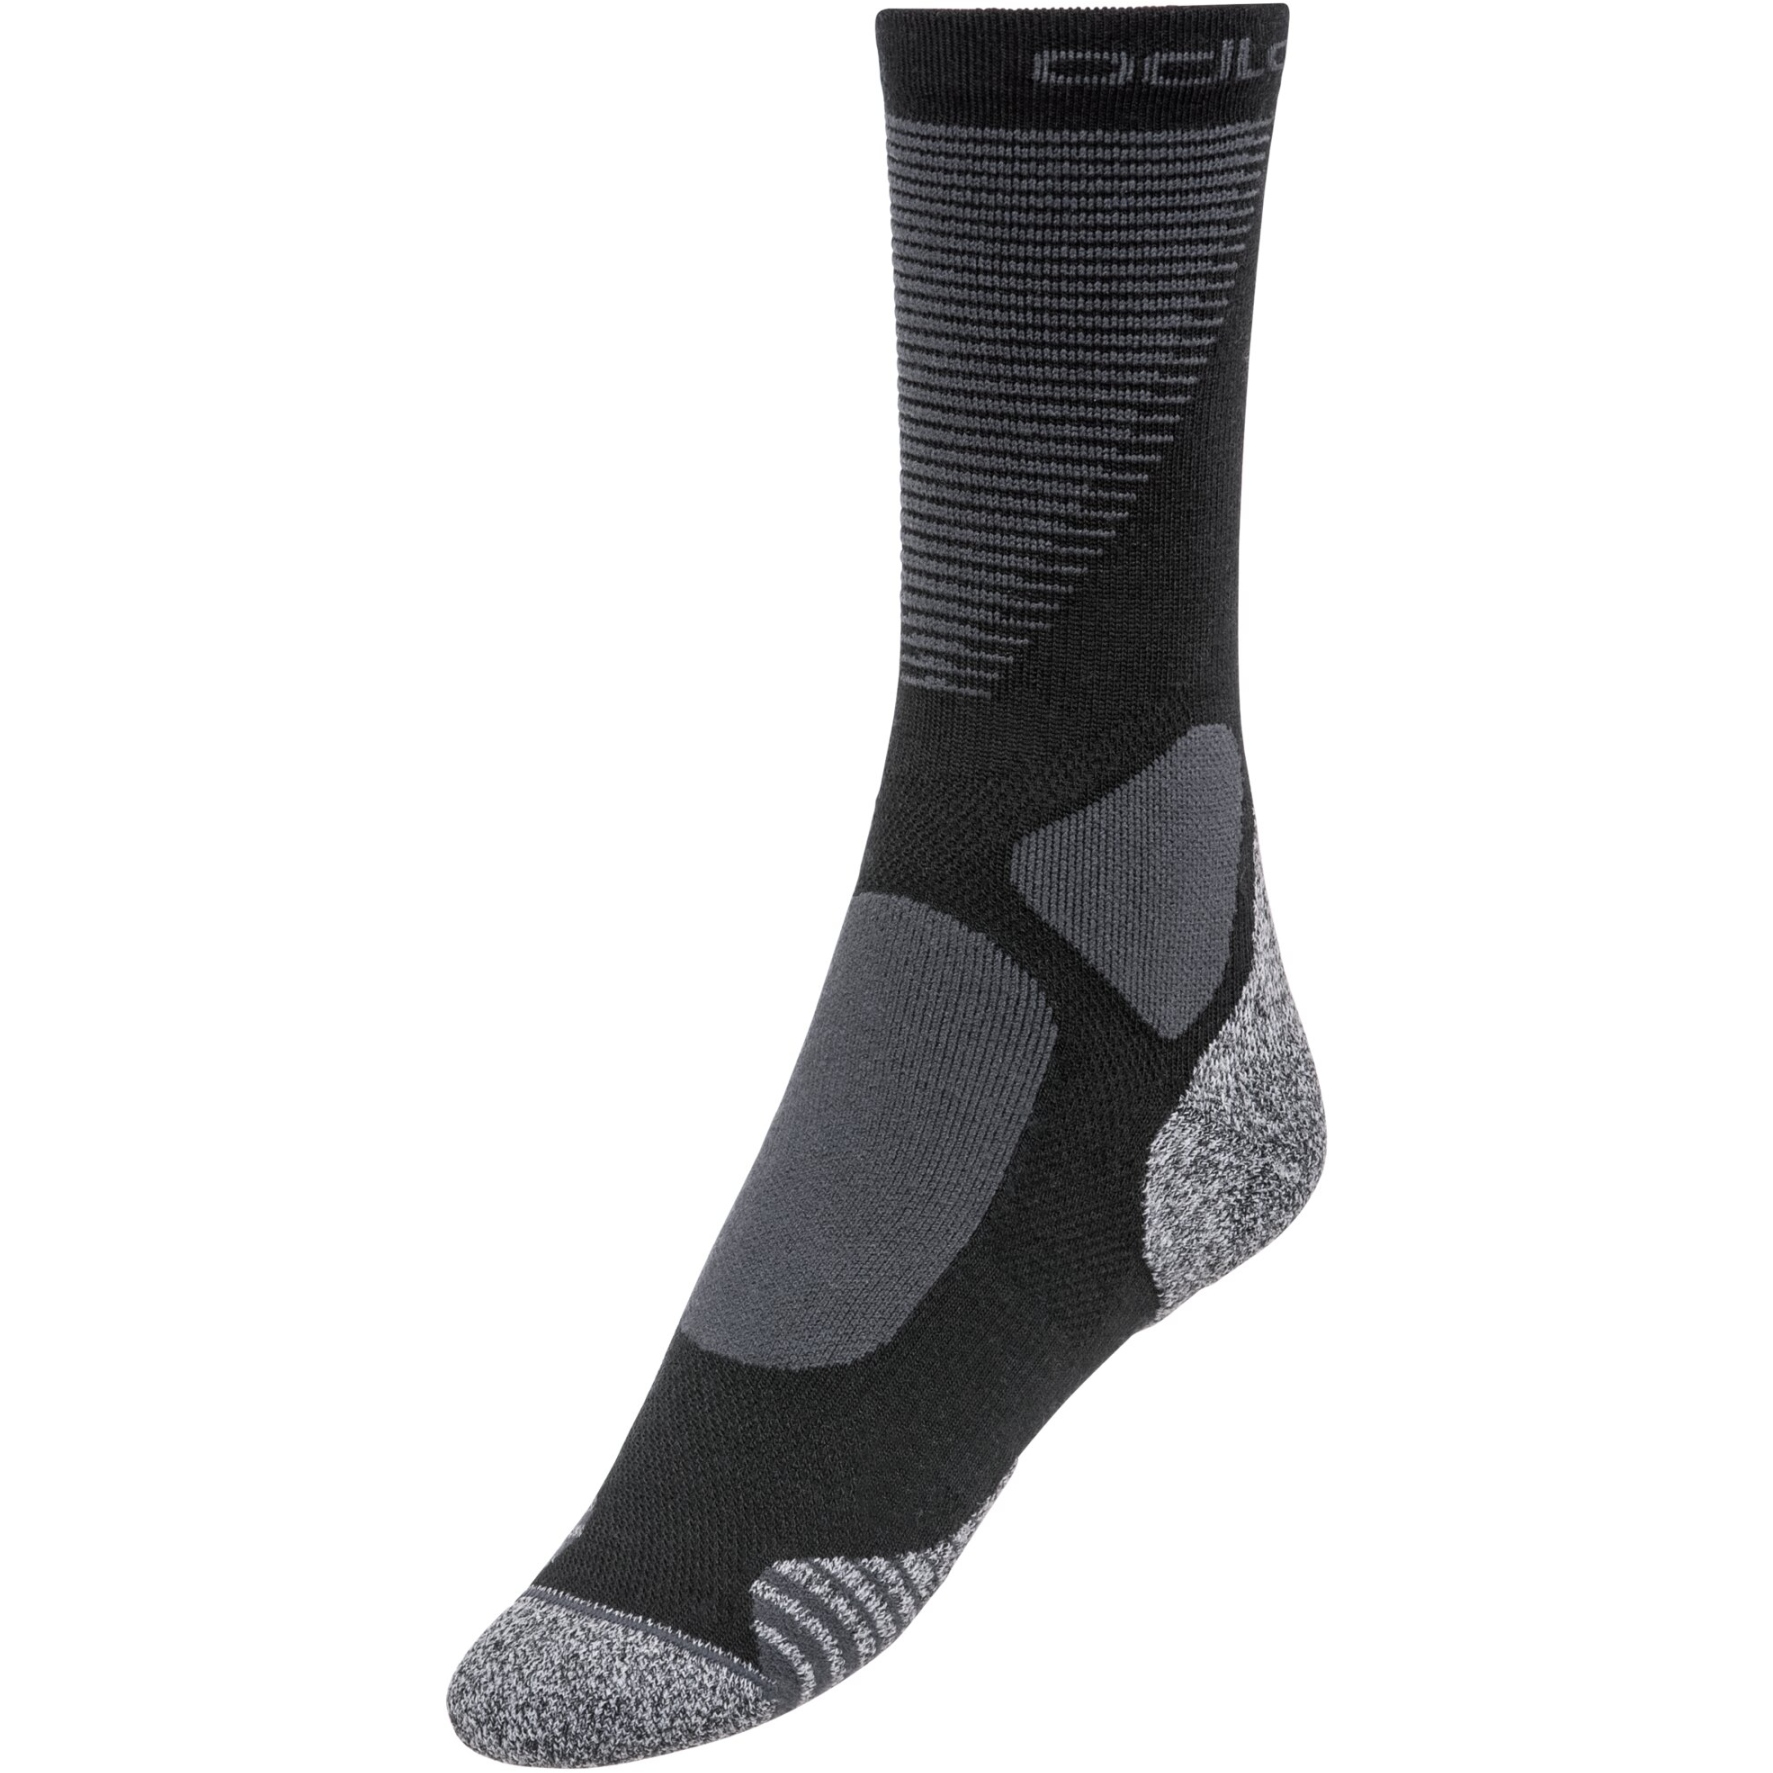 Image of Odlo Active Warm Cross-Country Crew Socks - black - odlo graphite grey